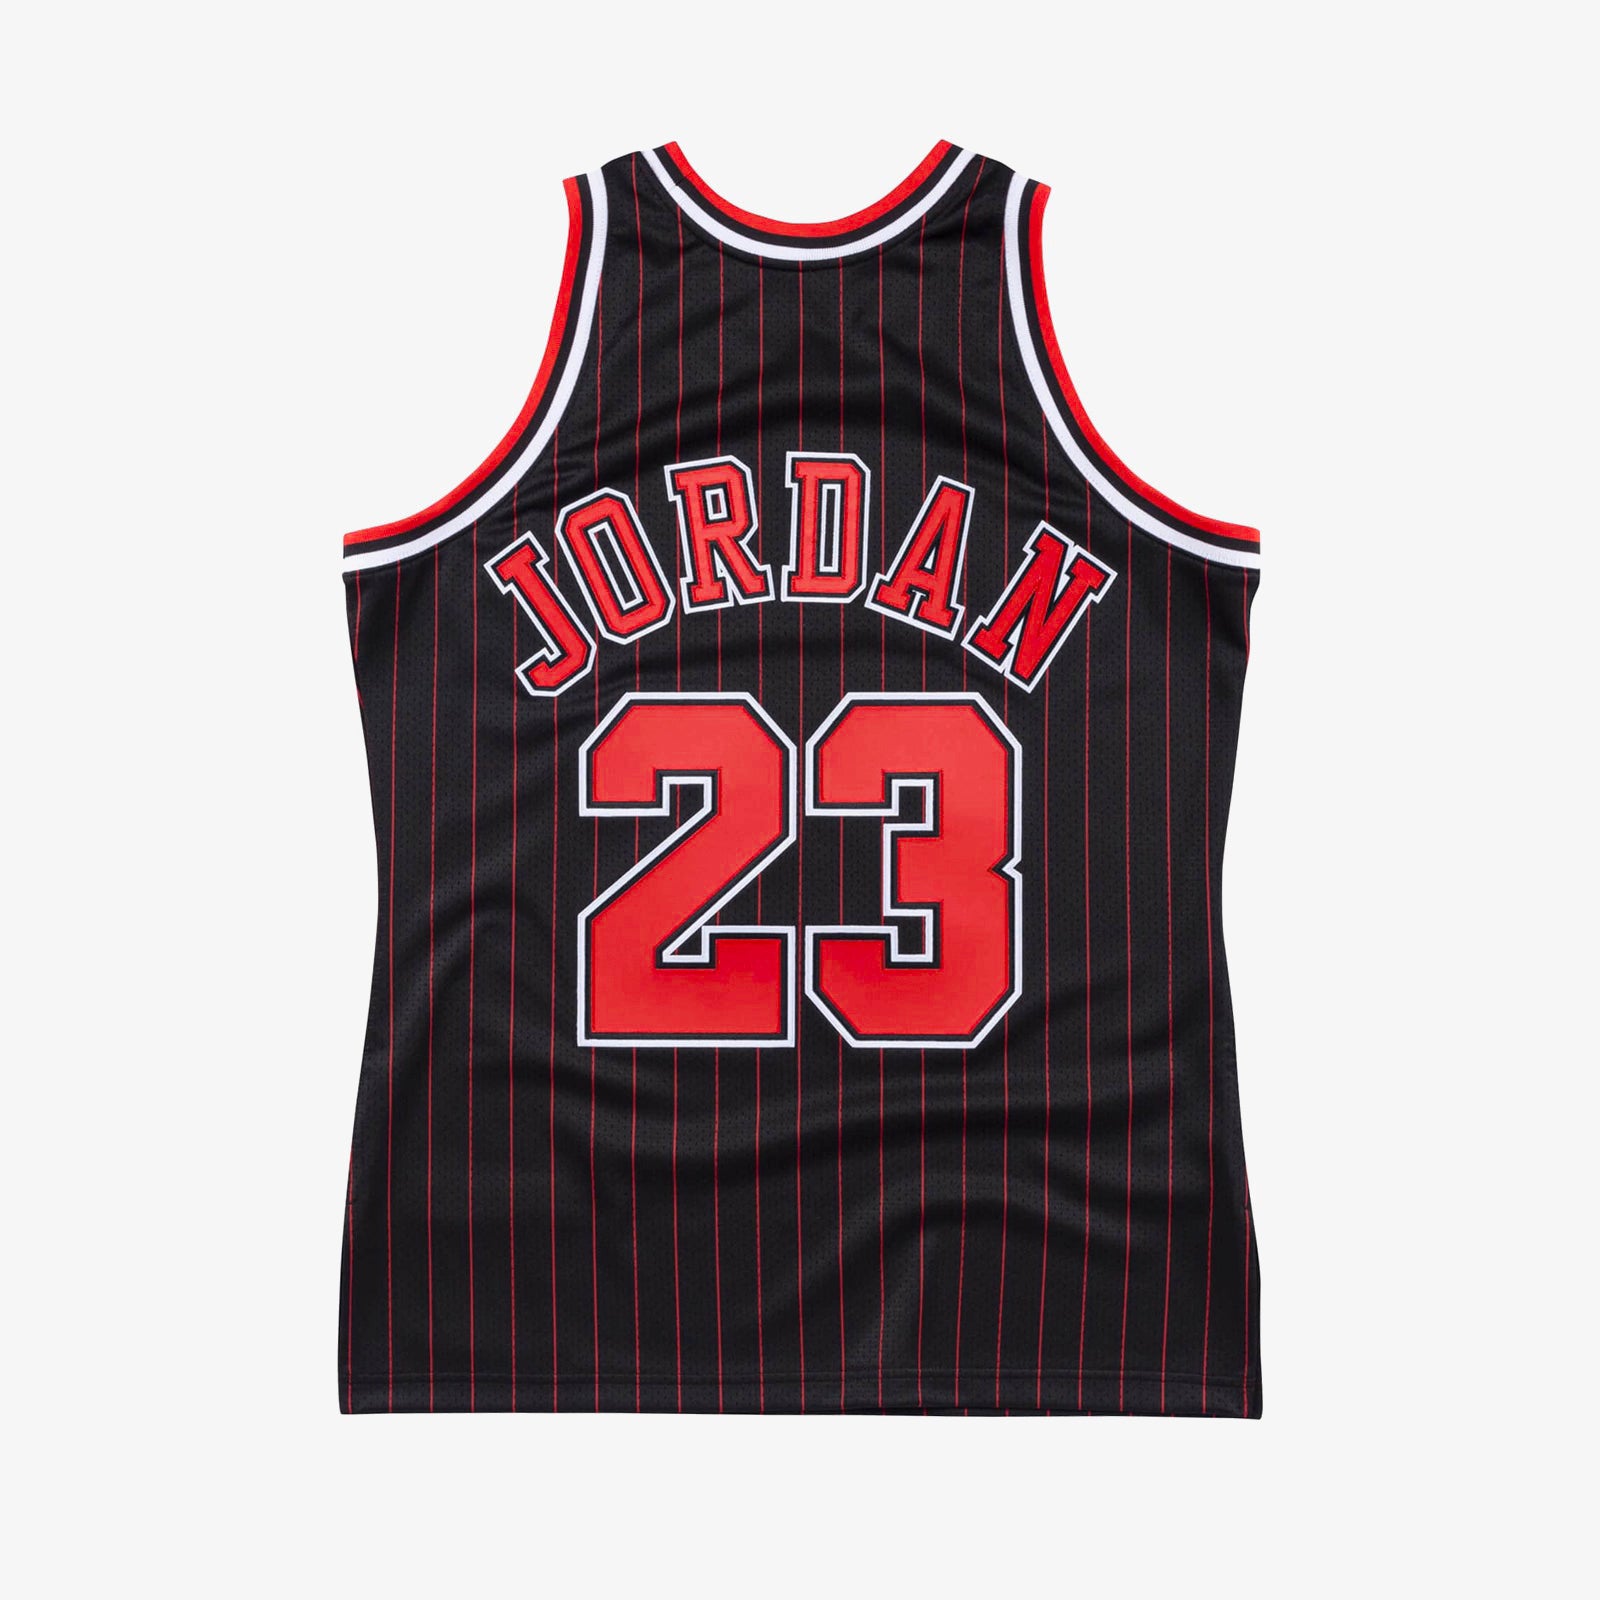 Michael Jordan Chicago Bulls Alternate 1995-96 Authentic Hardwood Clas -  Throwback